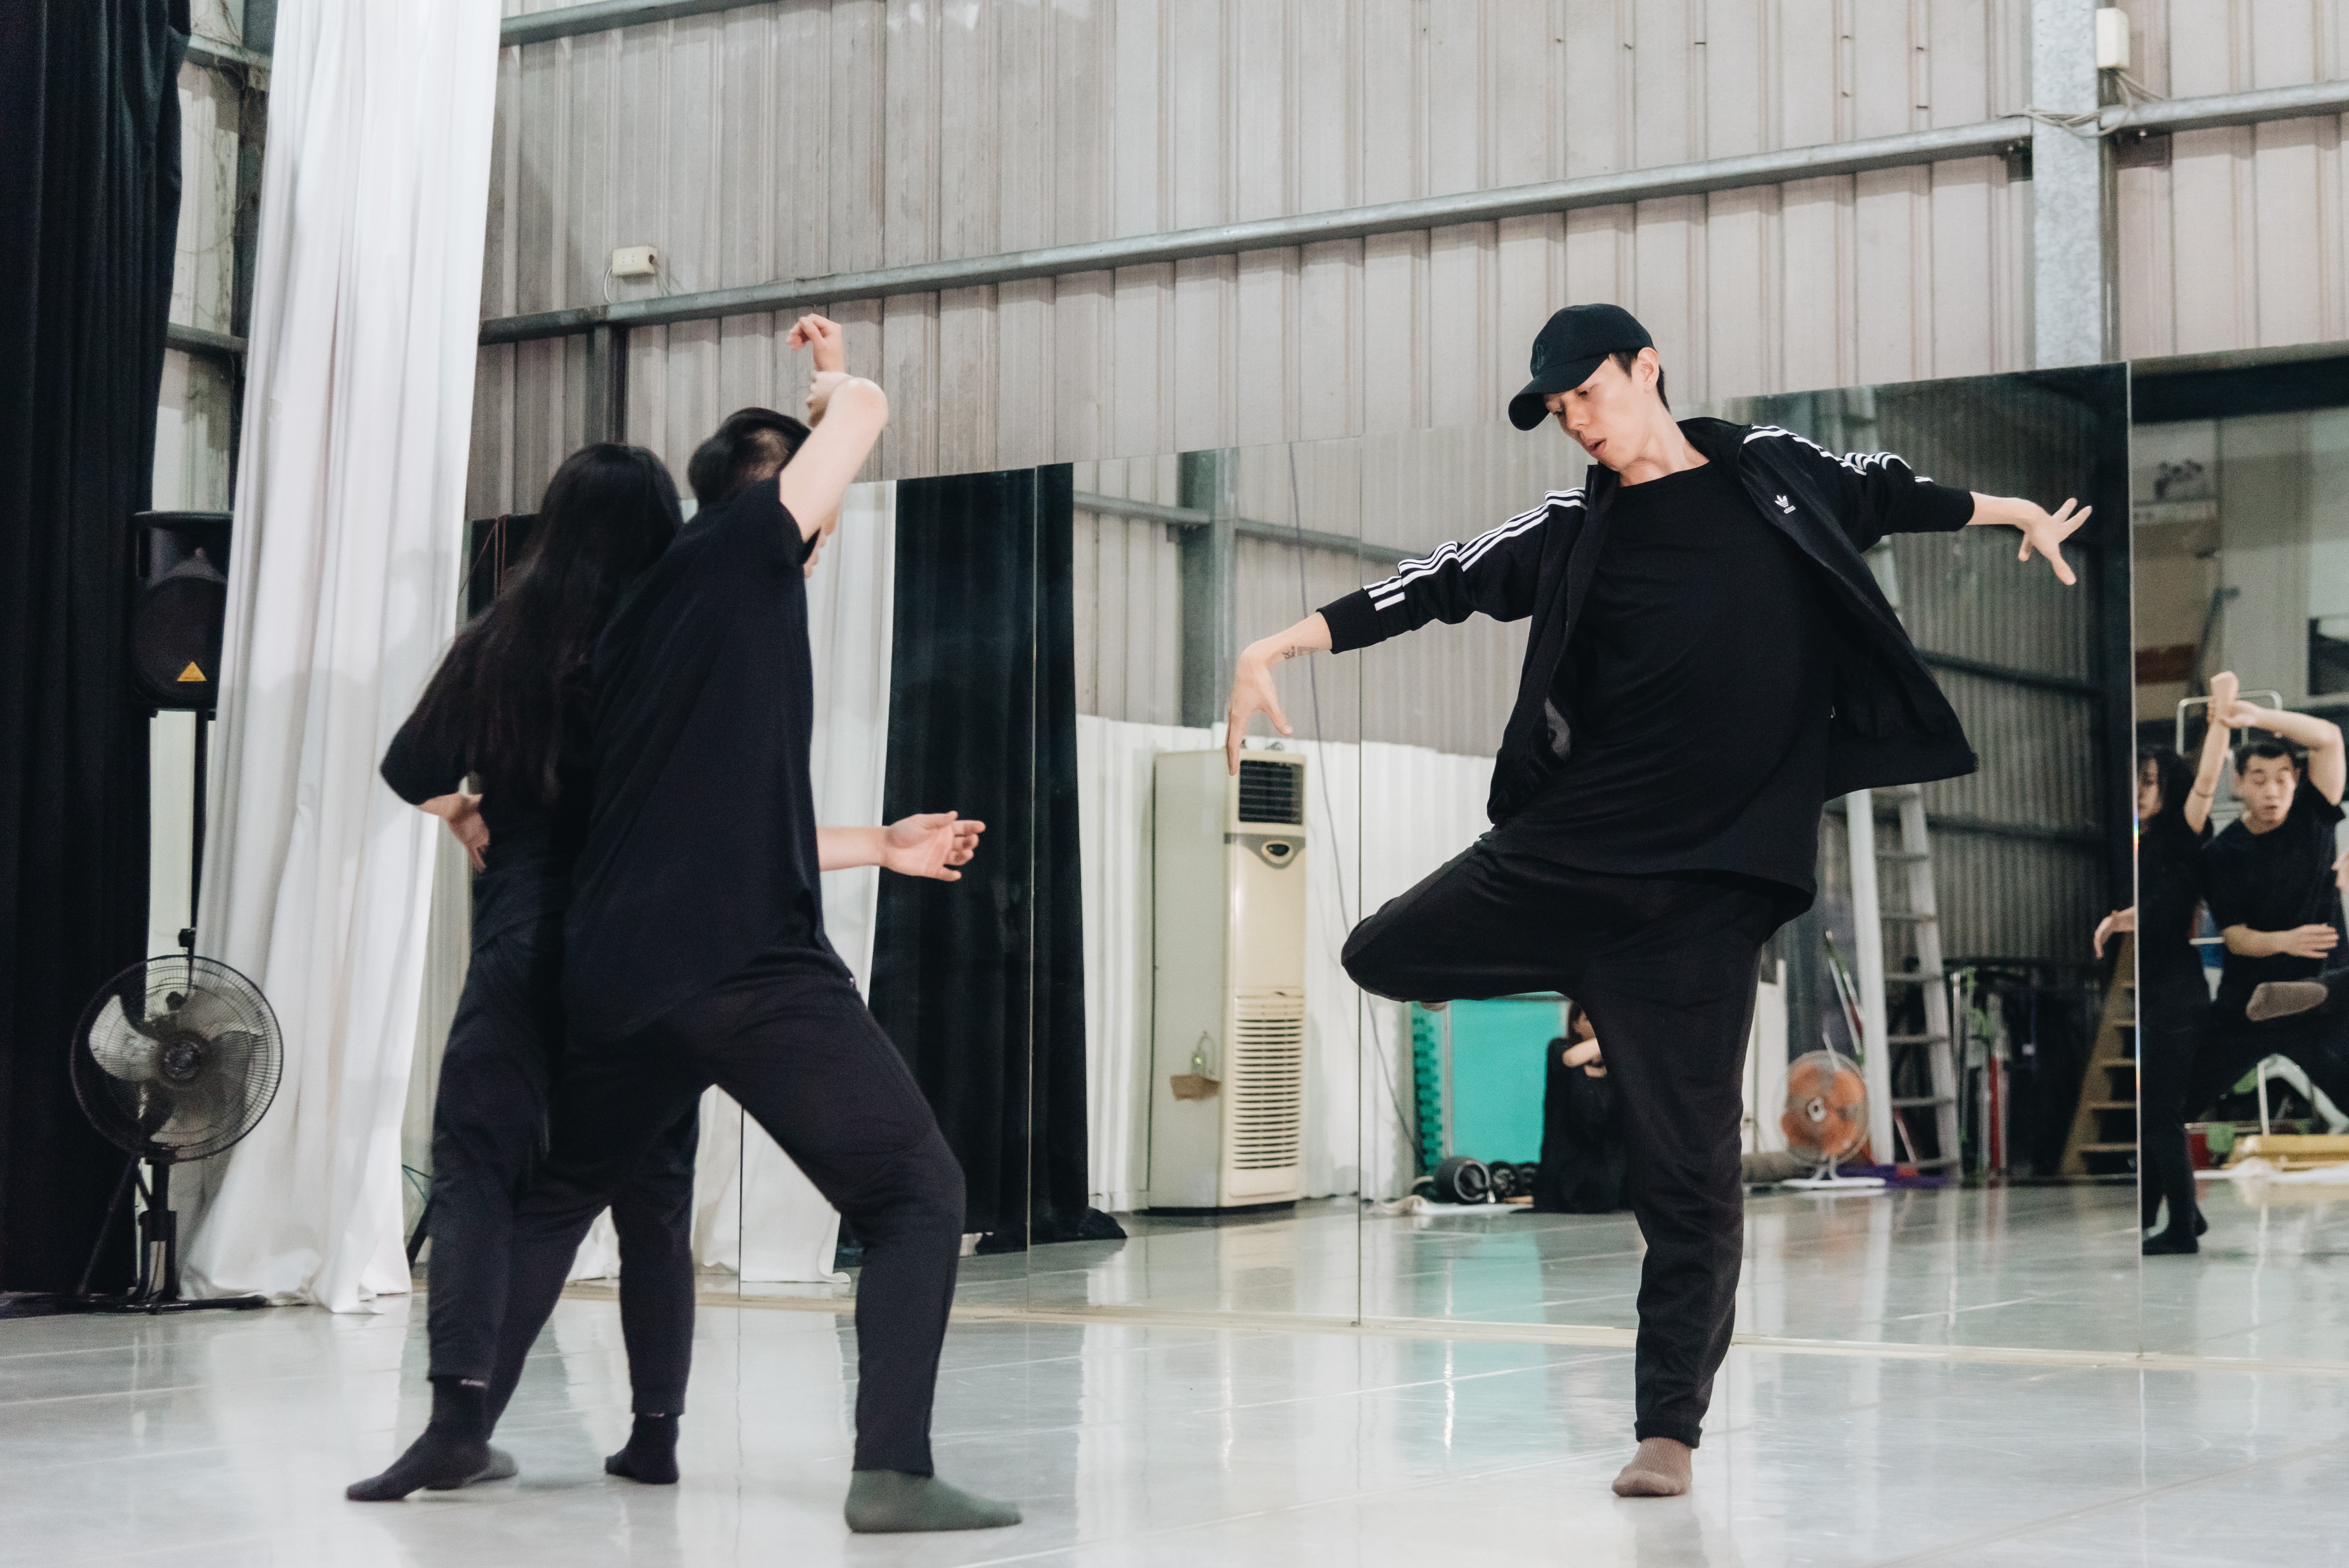 B.DANCE new production